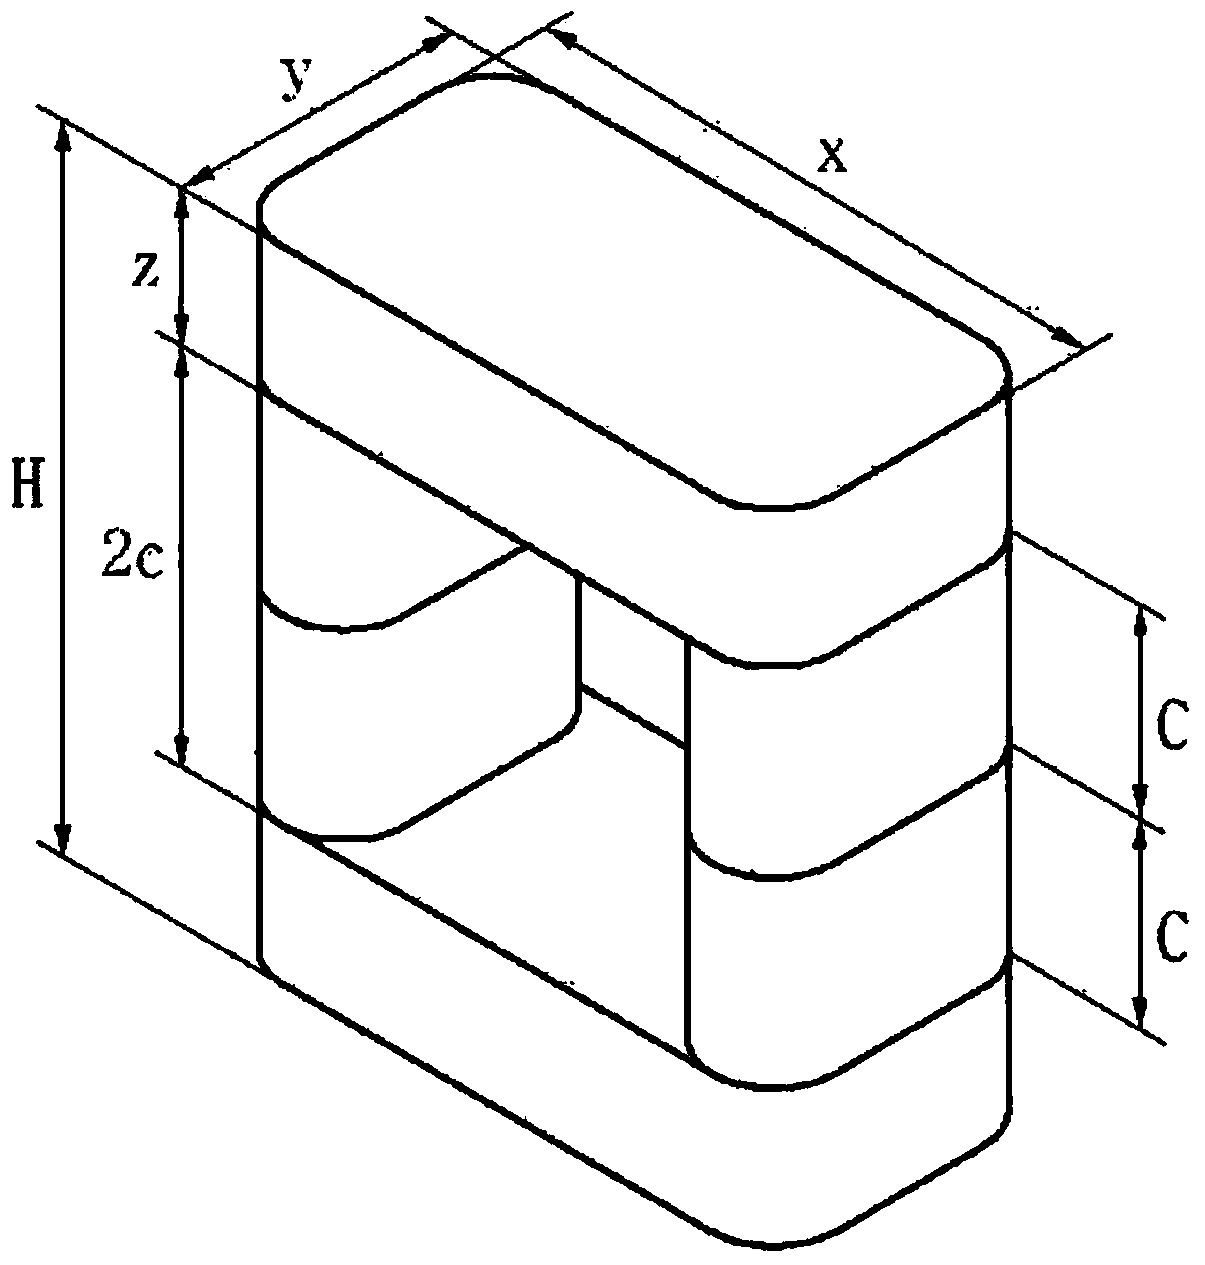 Elliptical unit block for preparing core using soft magnetic metal powder, and powdered magnetic core prepared using same